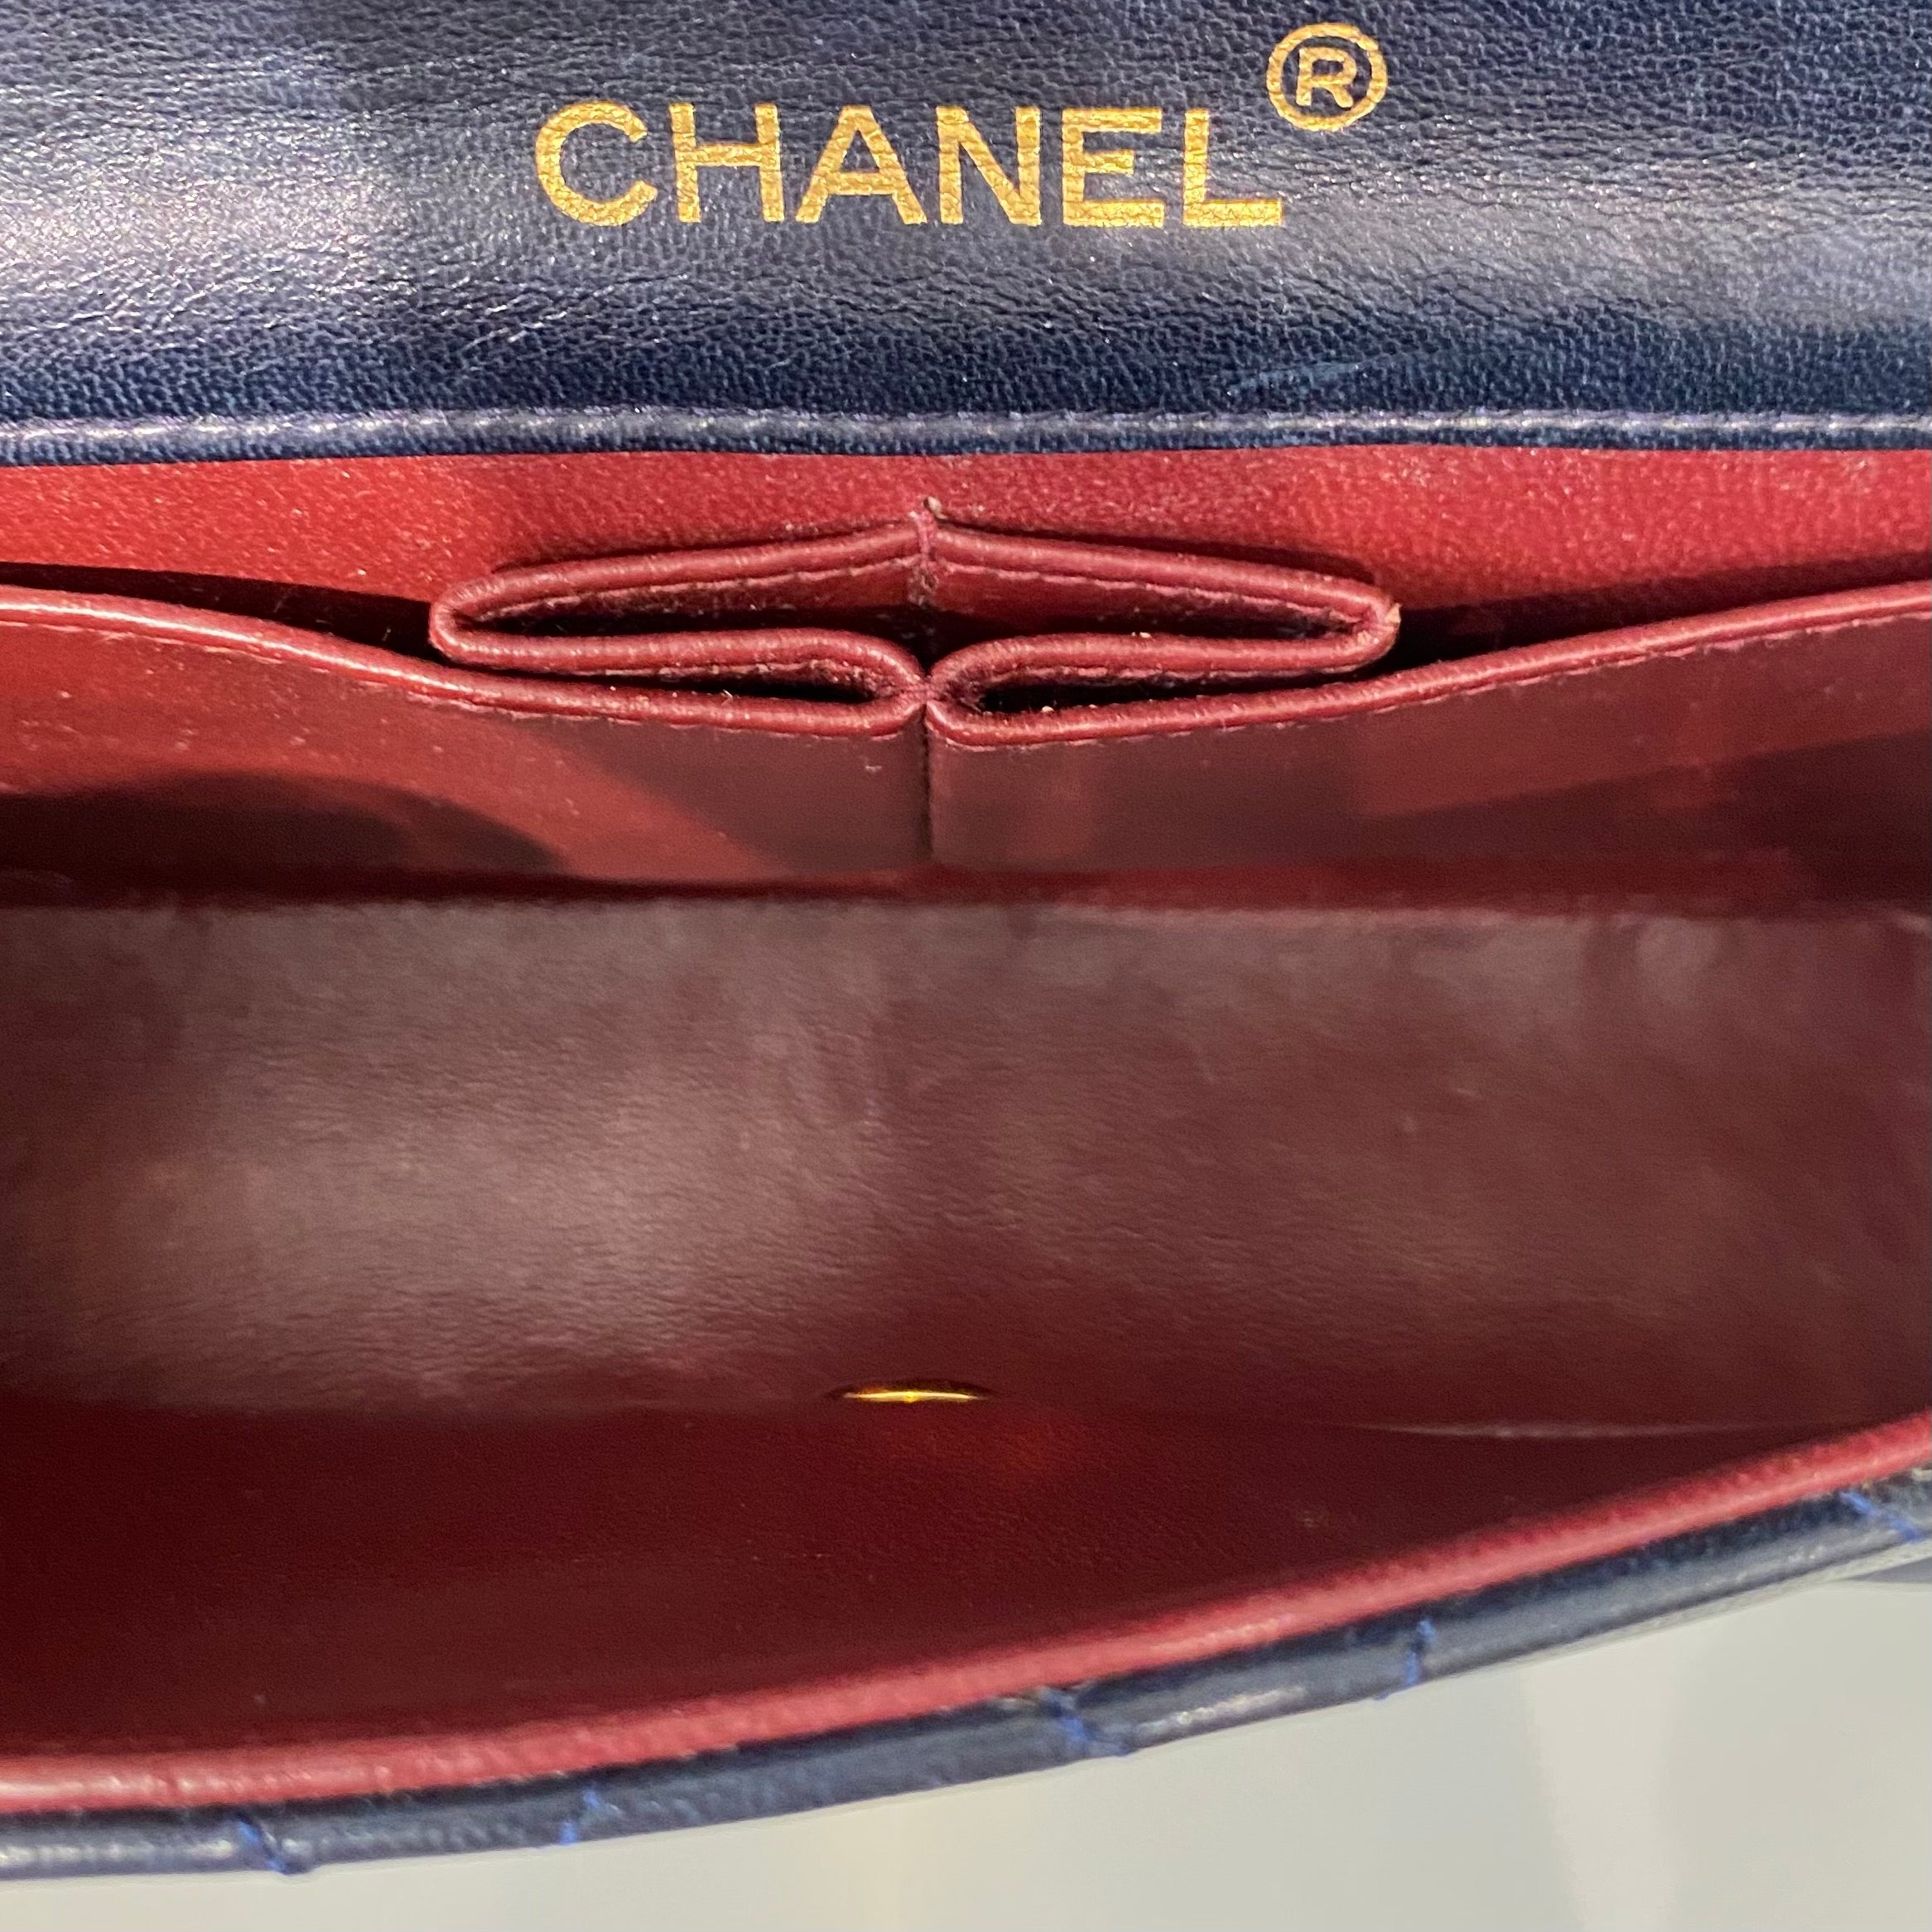 Chanel Vintage Navy CC Flap Bag